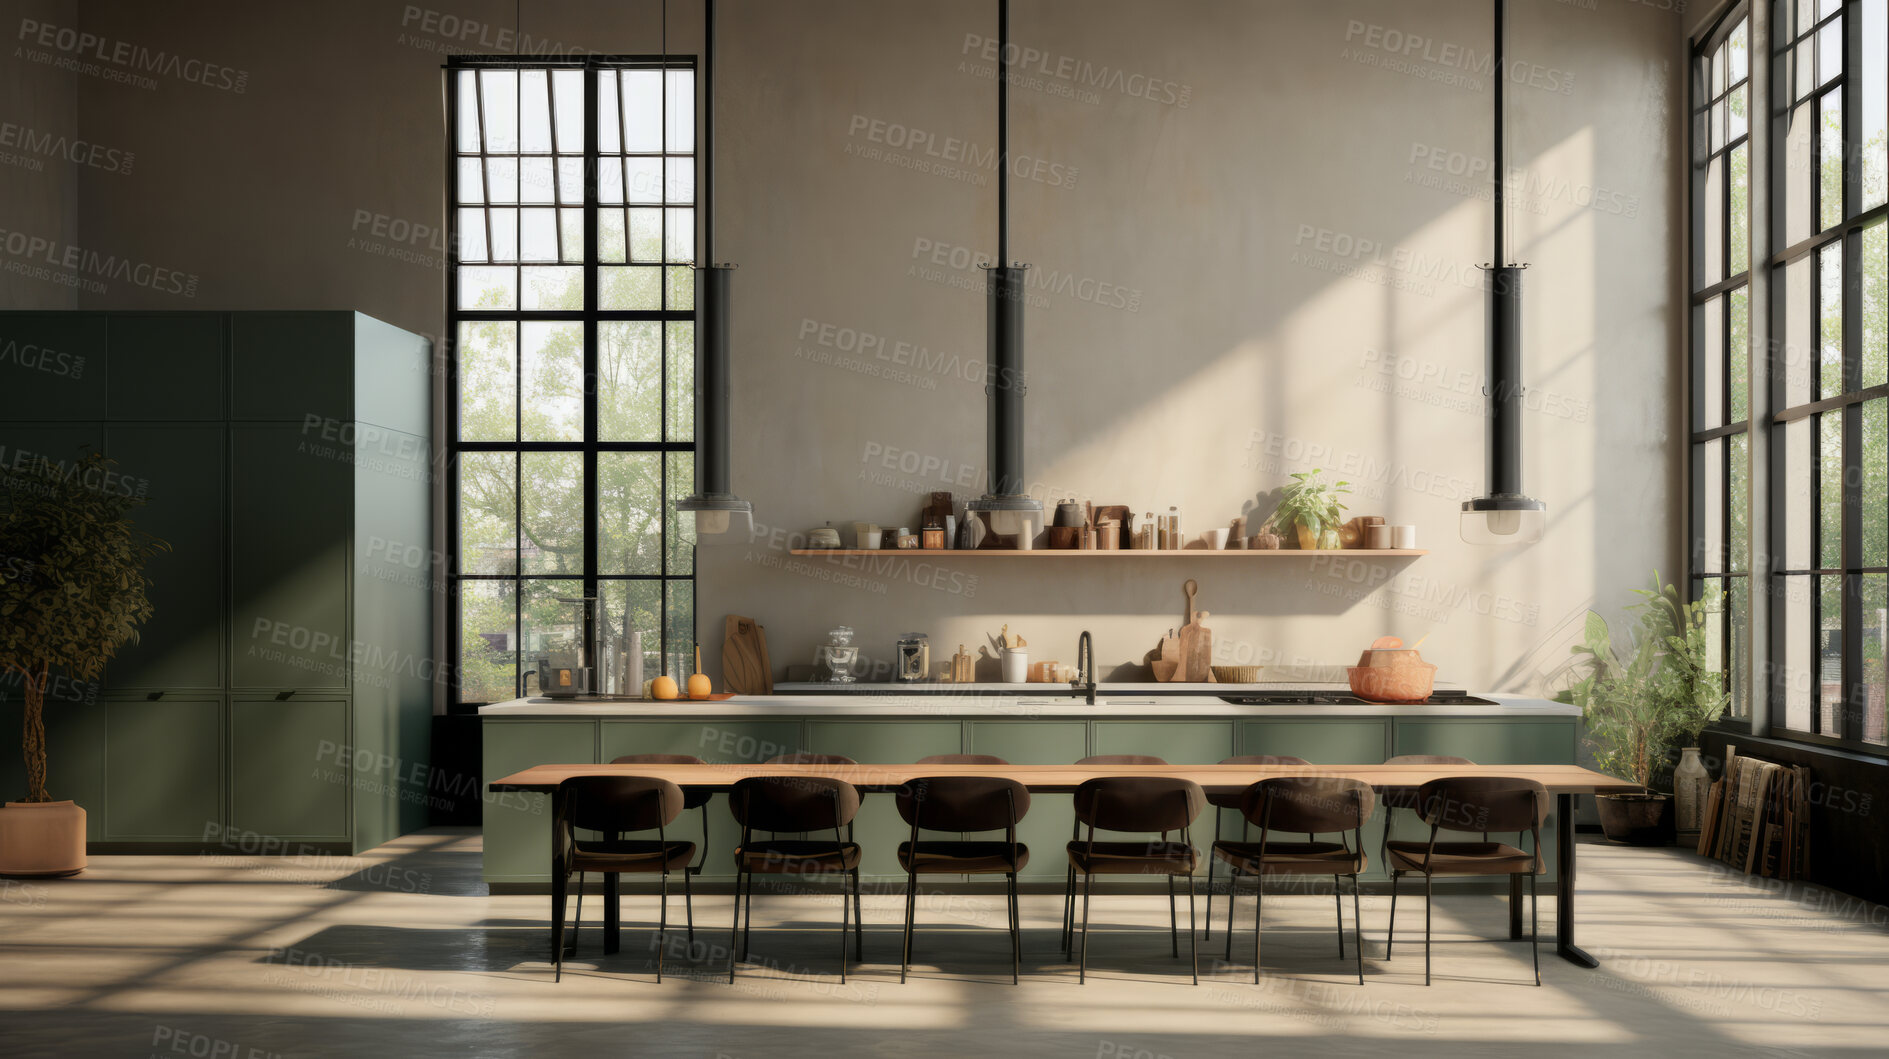 Buy stock photo Luxury kitchen interior design mockup. High windows and kitchen furniture render